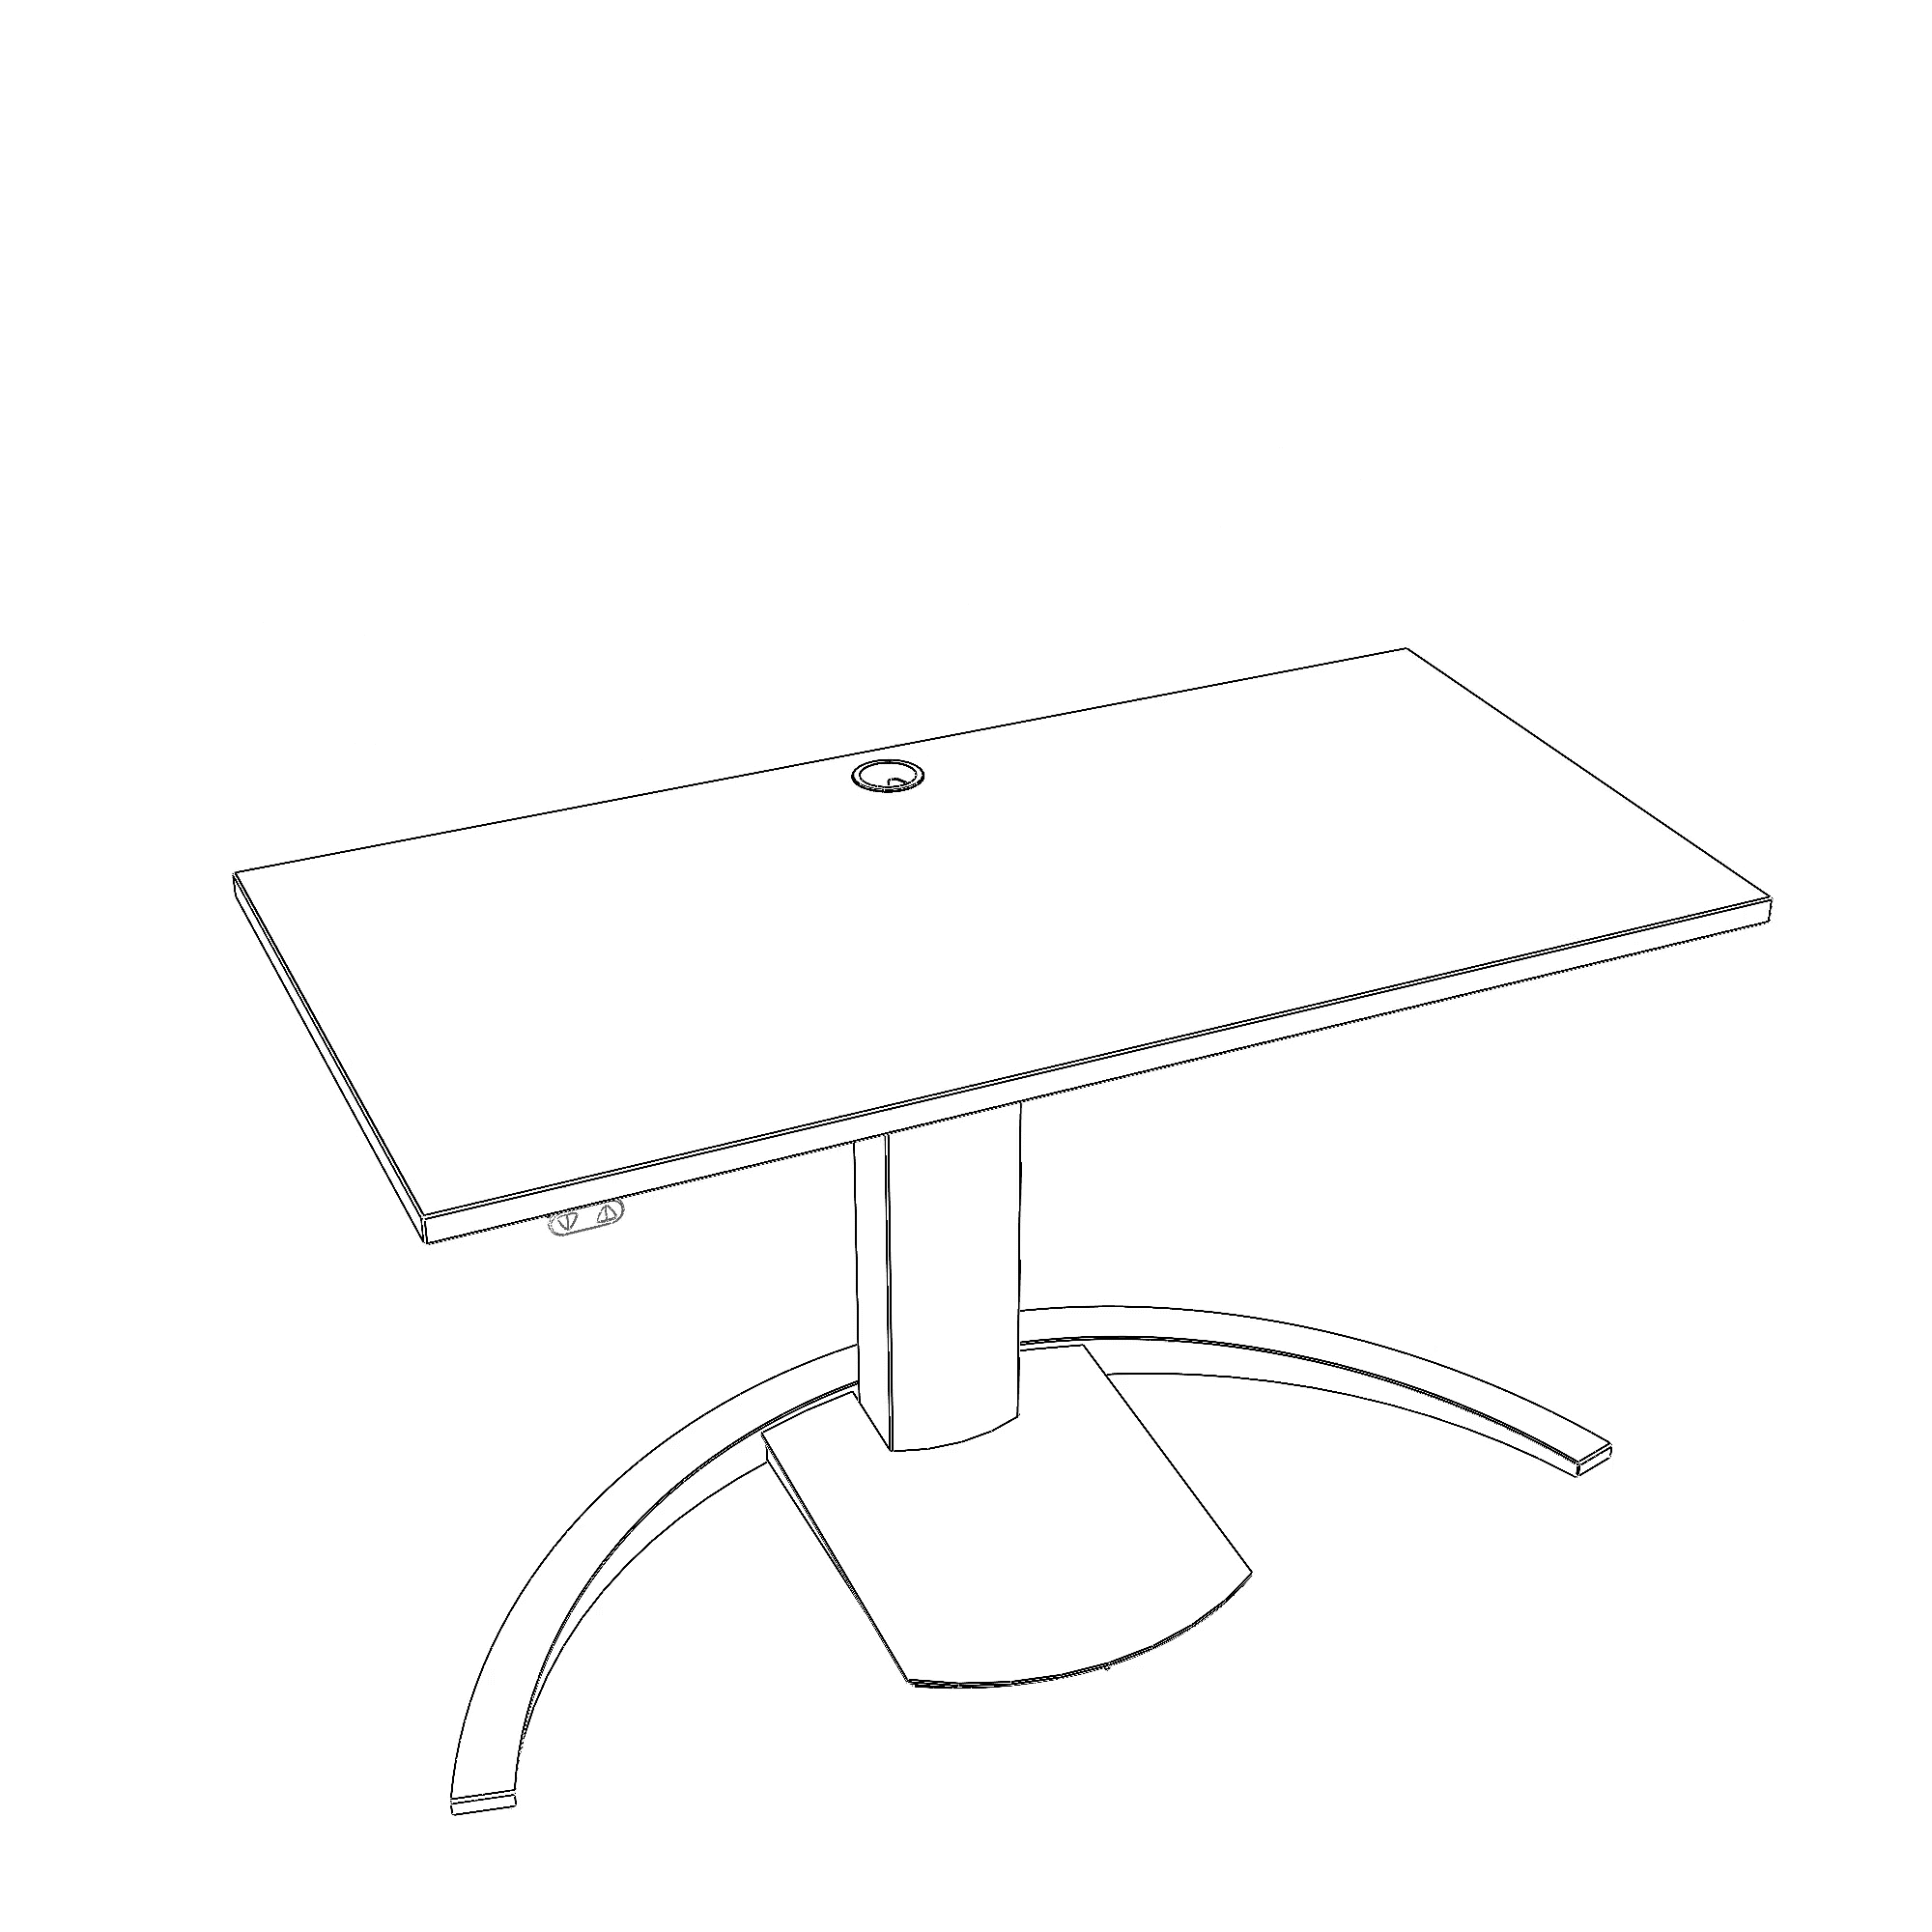 Electric Adjustable Desk | 120x80 cm | Maple with black frame